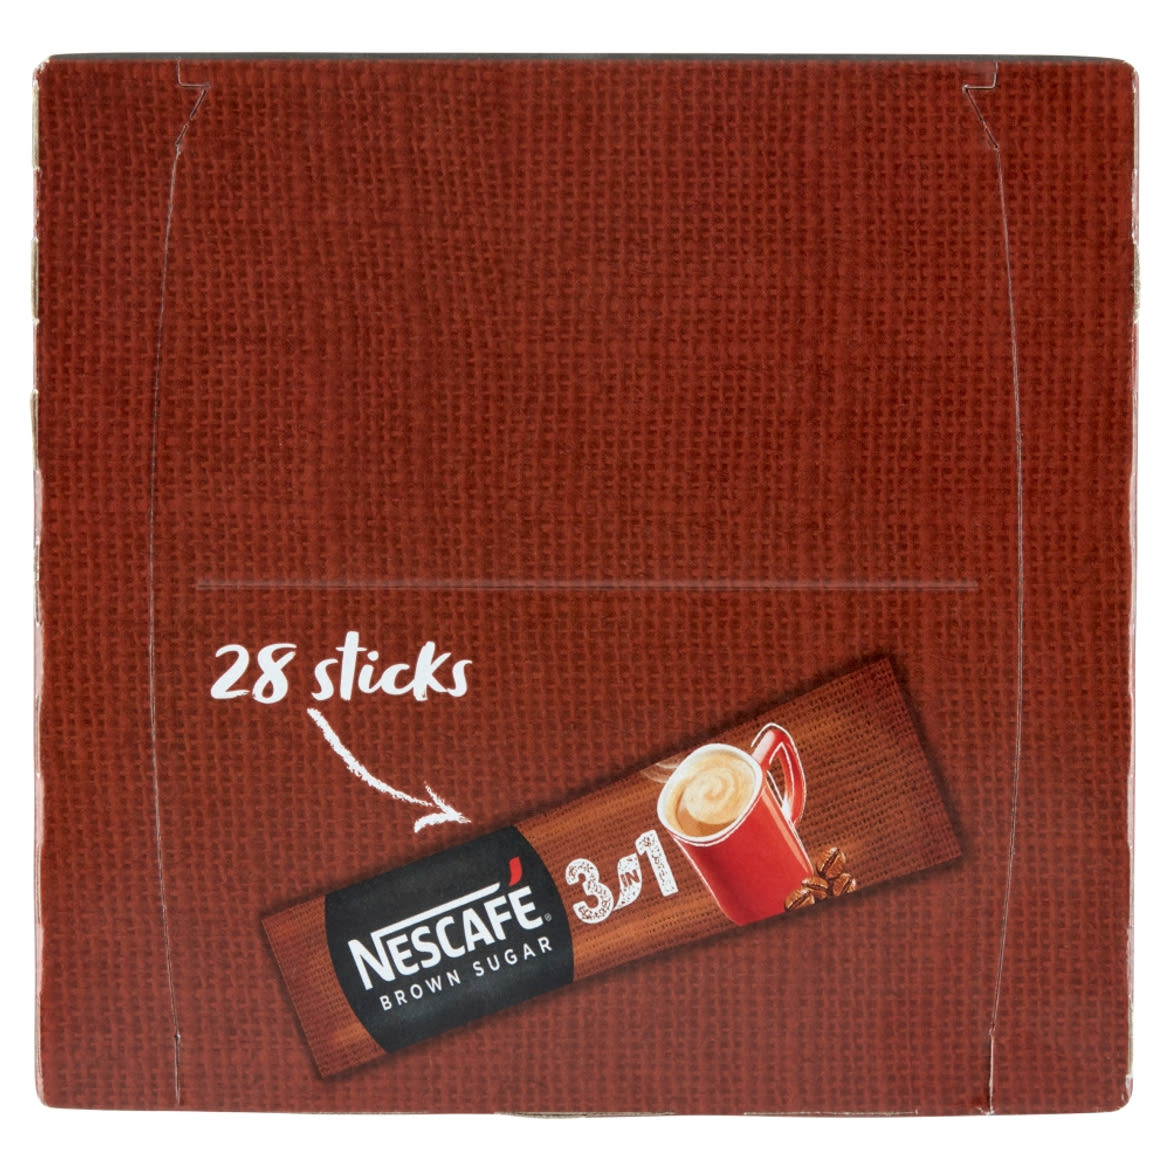 Nescafé 3in1 Brown Sugar azonnal oldódó kávéspecialitás barnacukorral 28 x 16,5 g